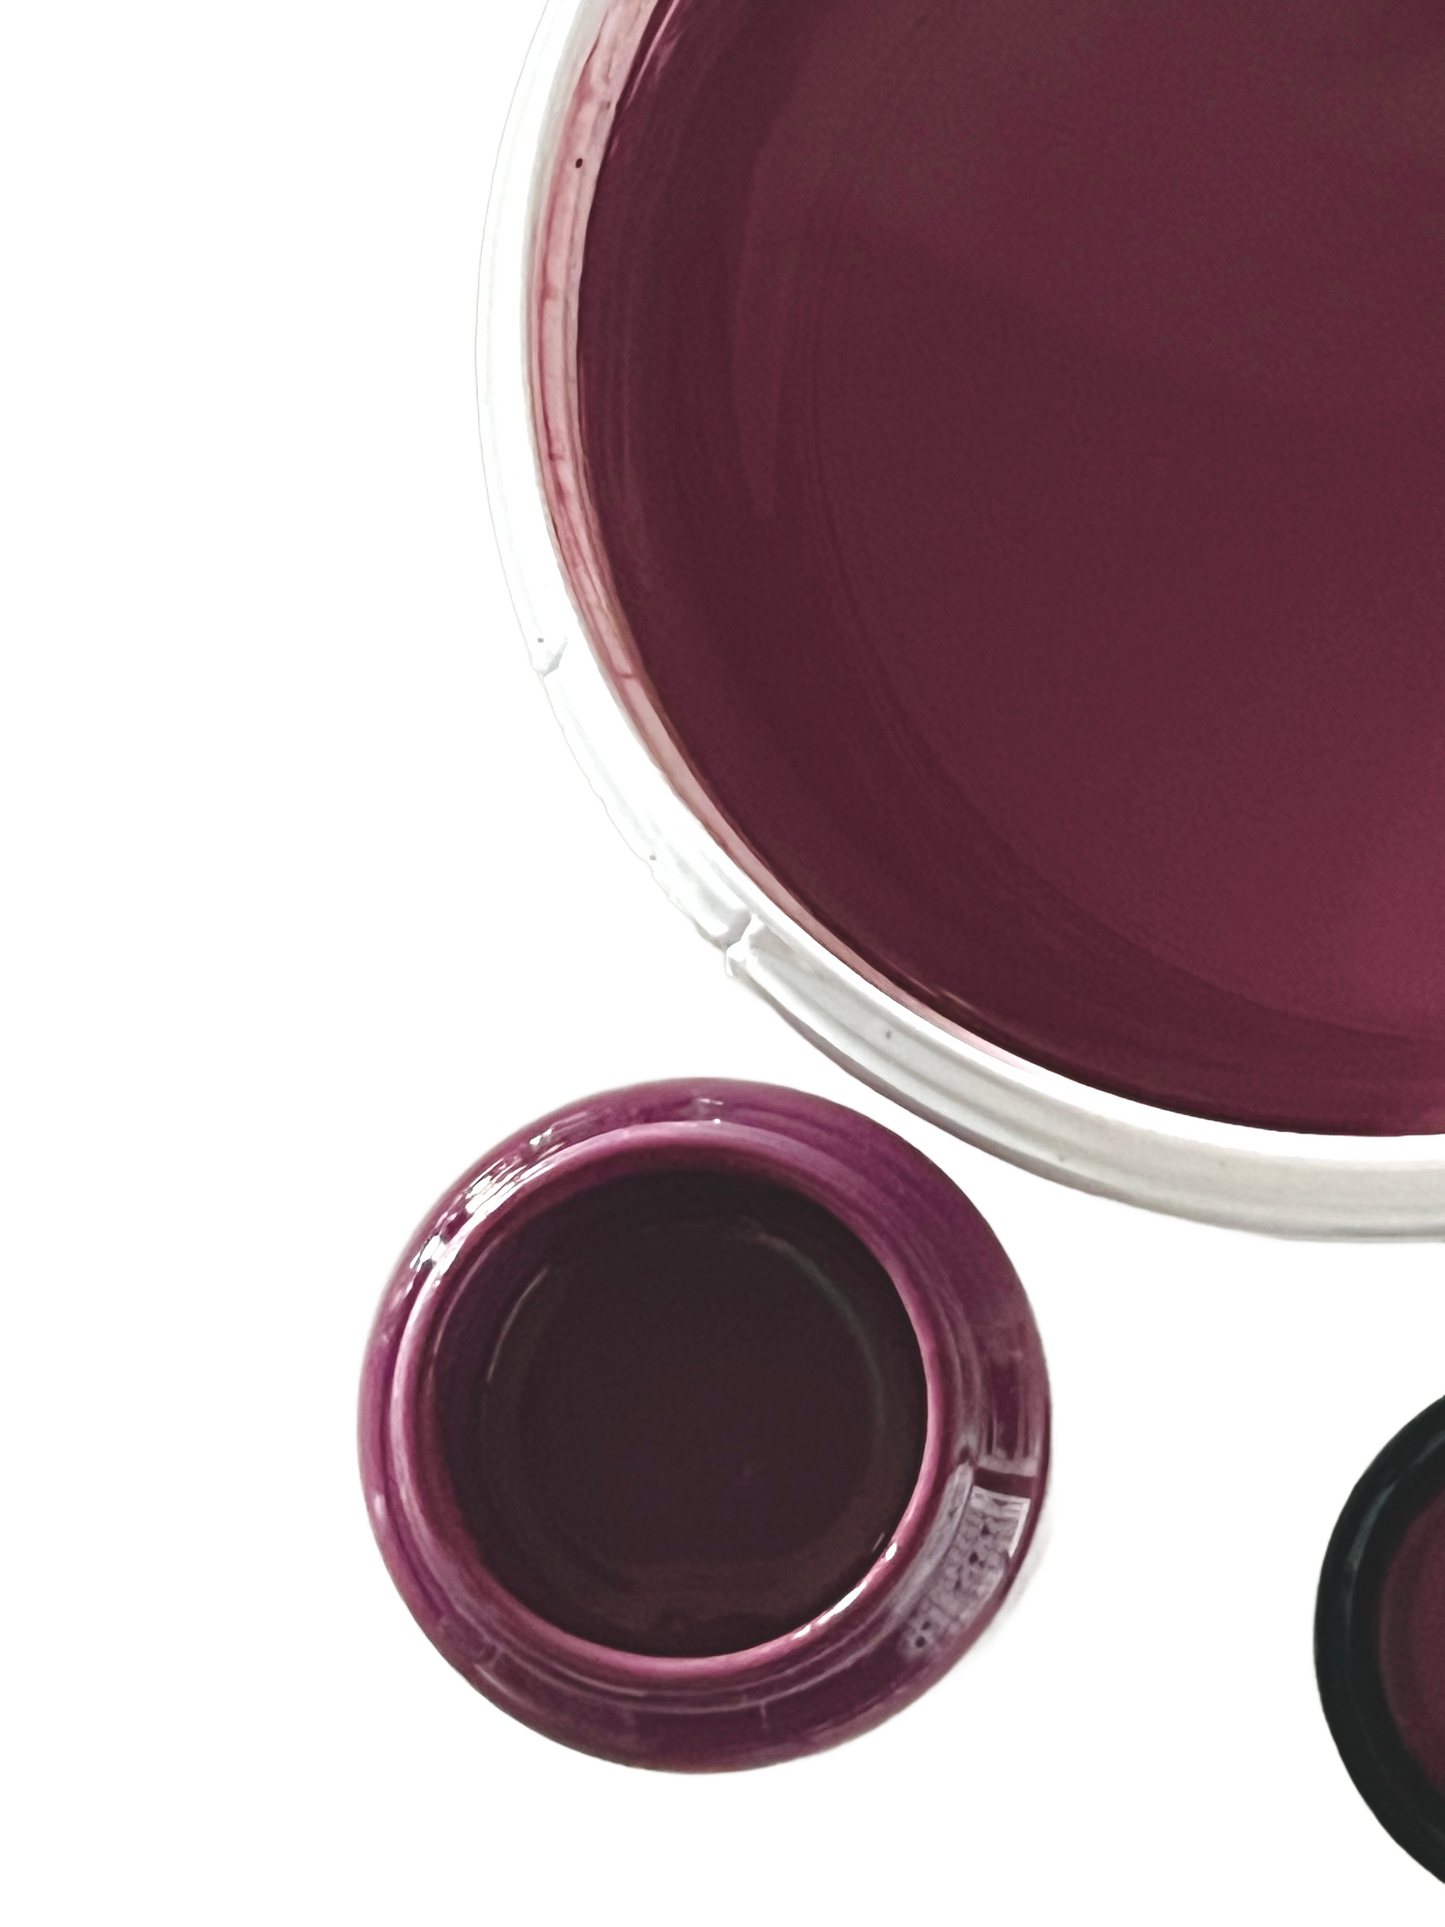 "Wineberry" Chalk paint SALE 500ml